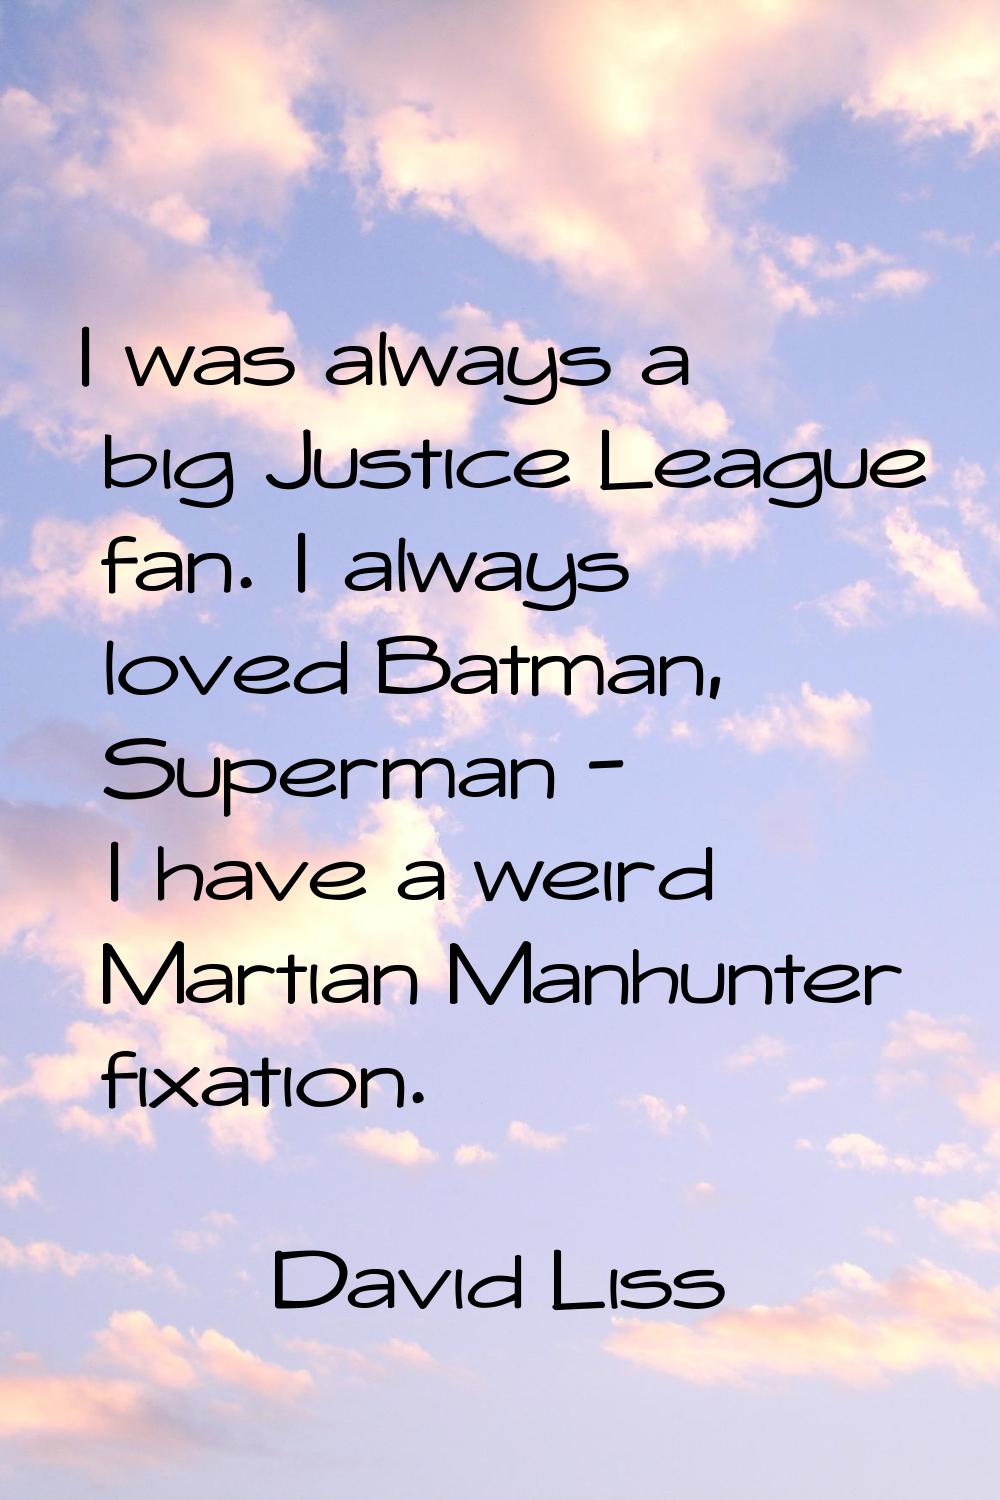 I was always a big Justice League fan. I always loved Batman, Superman - I have a weird Martian Man